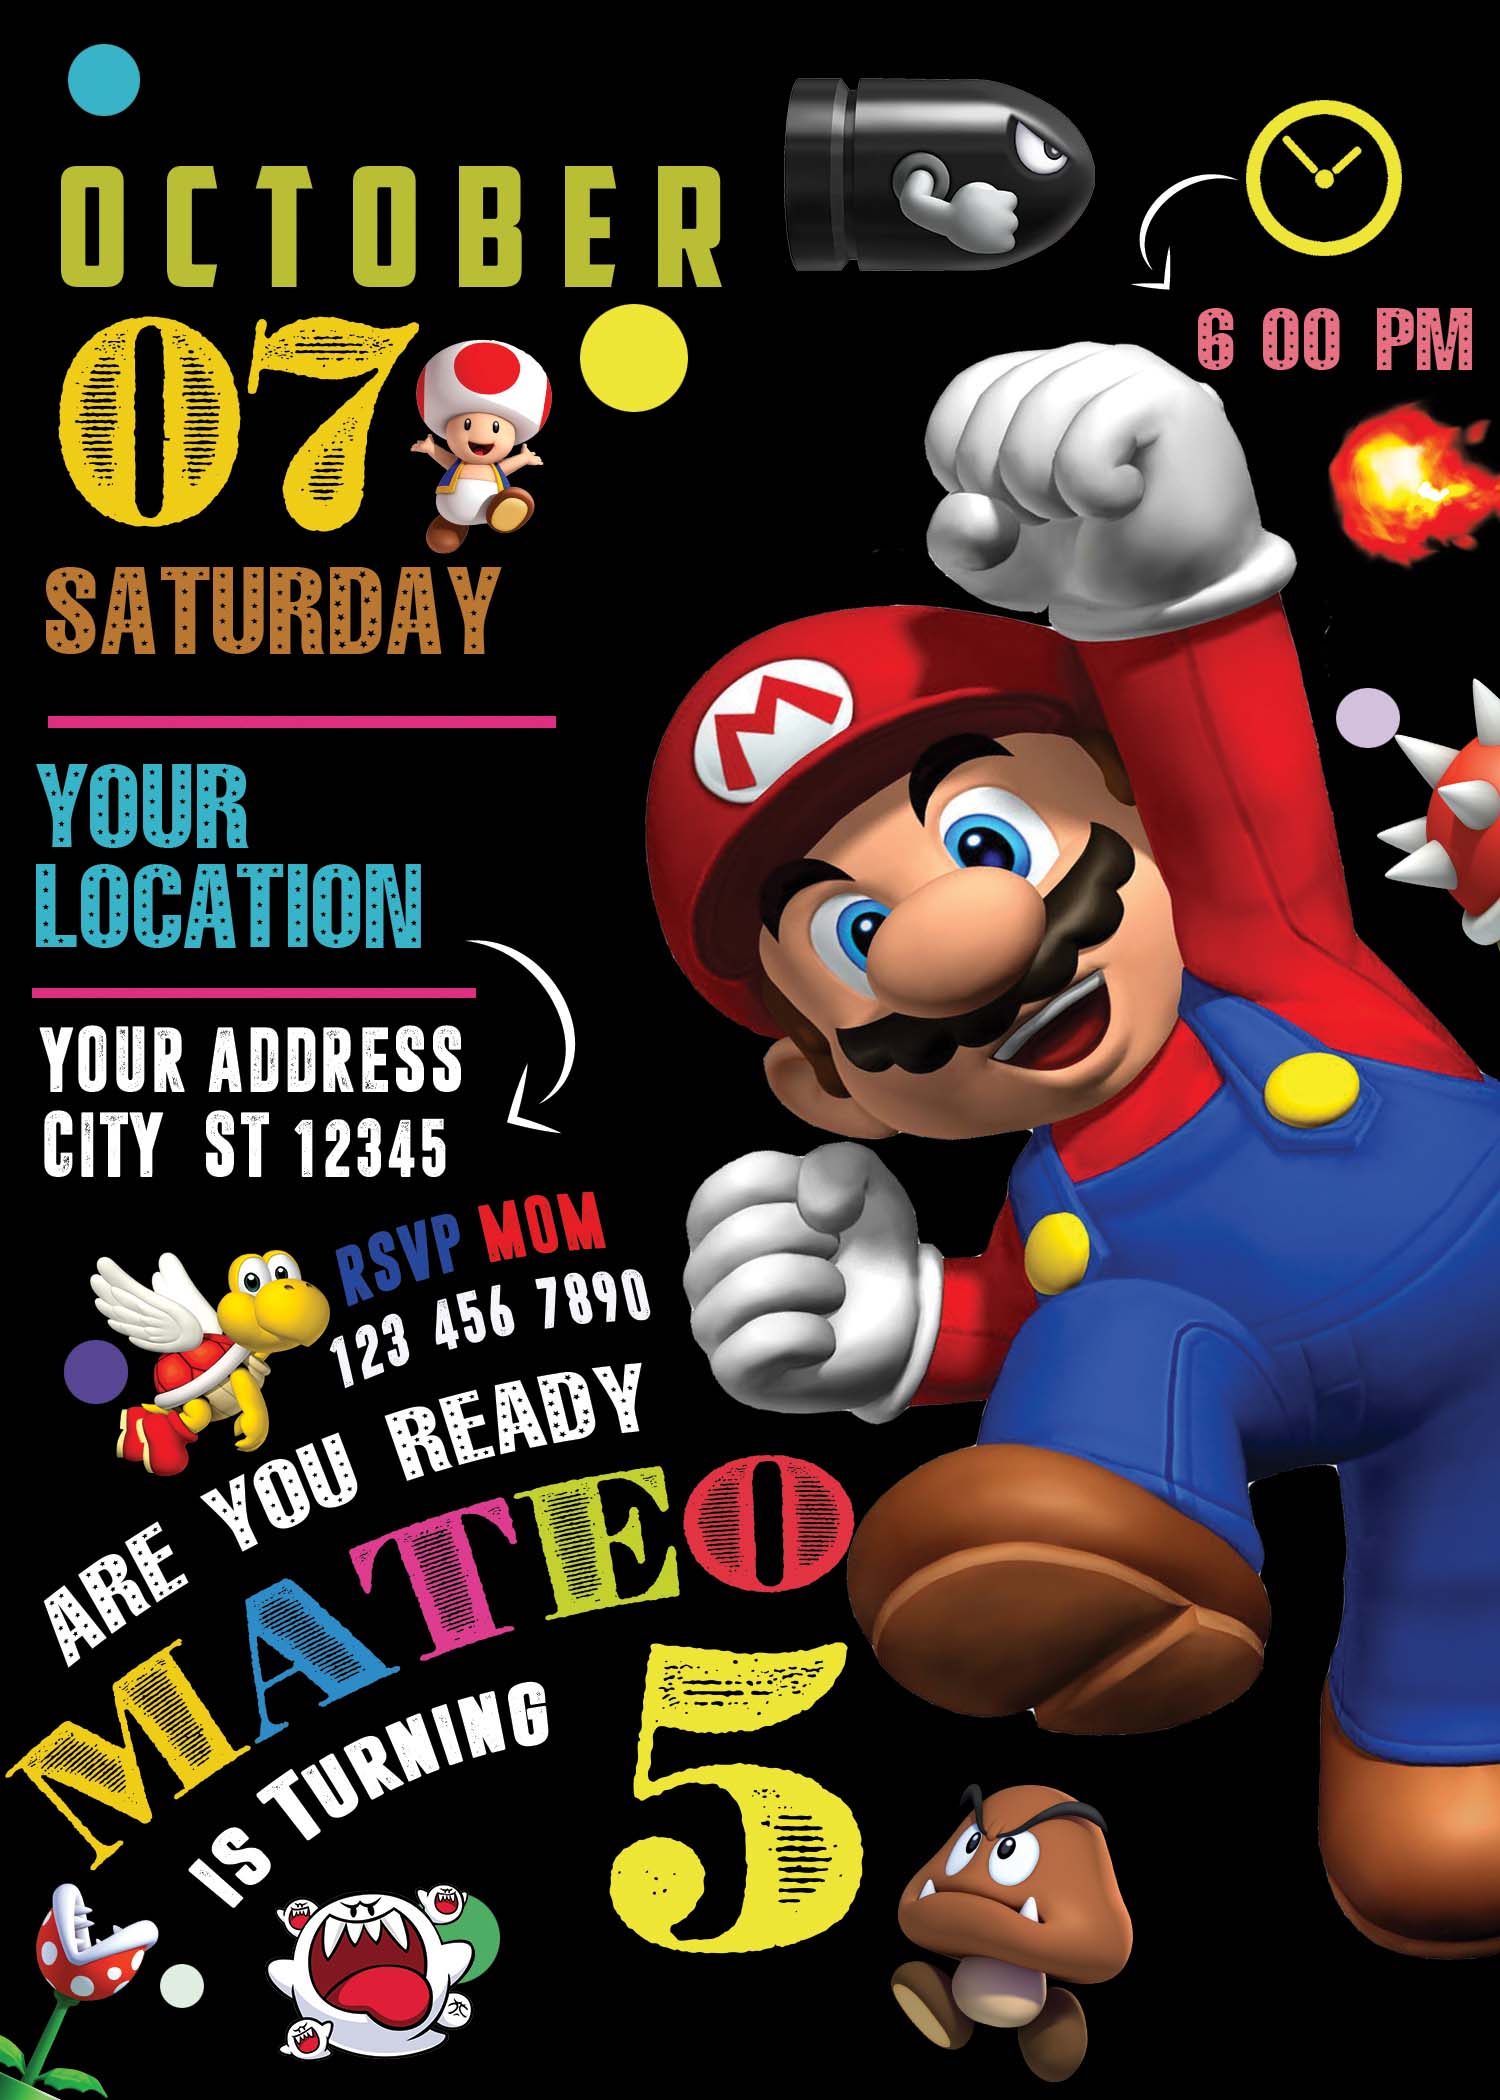 Mario Bros Birthday Party Invitation Super Invite